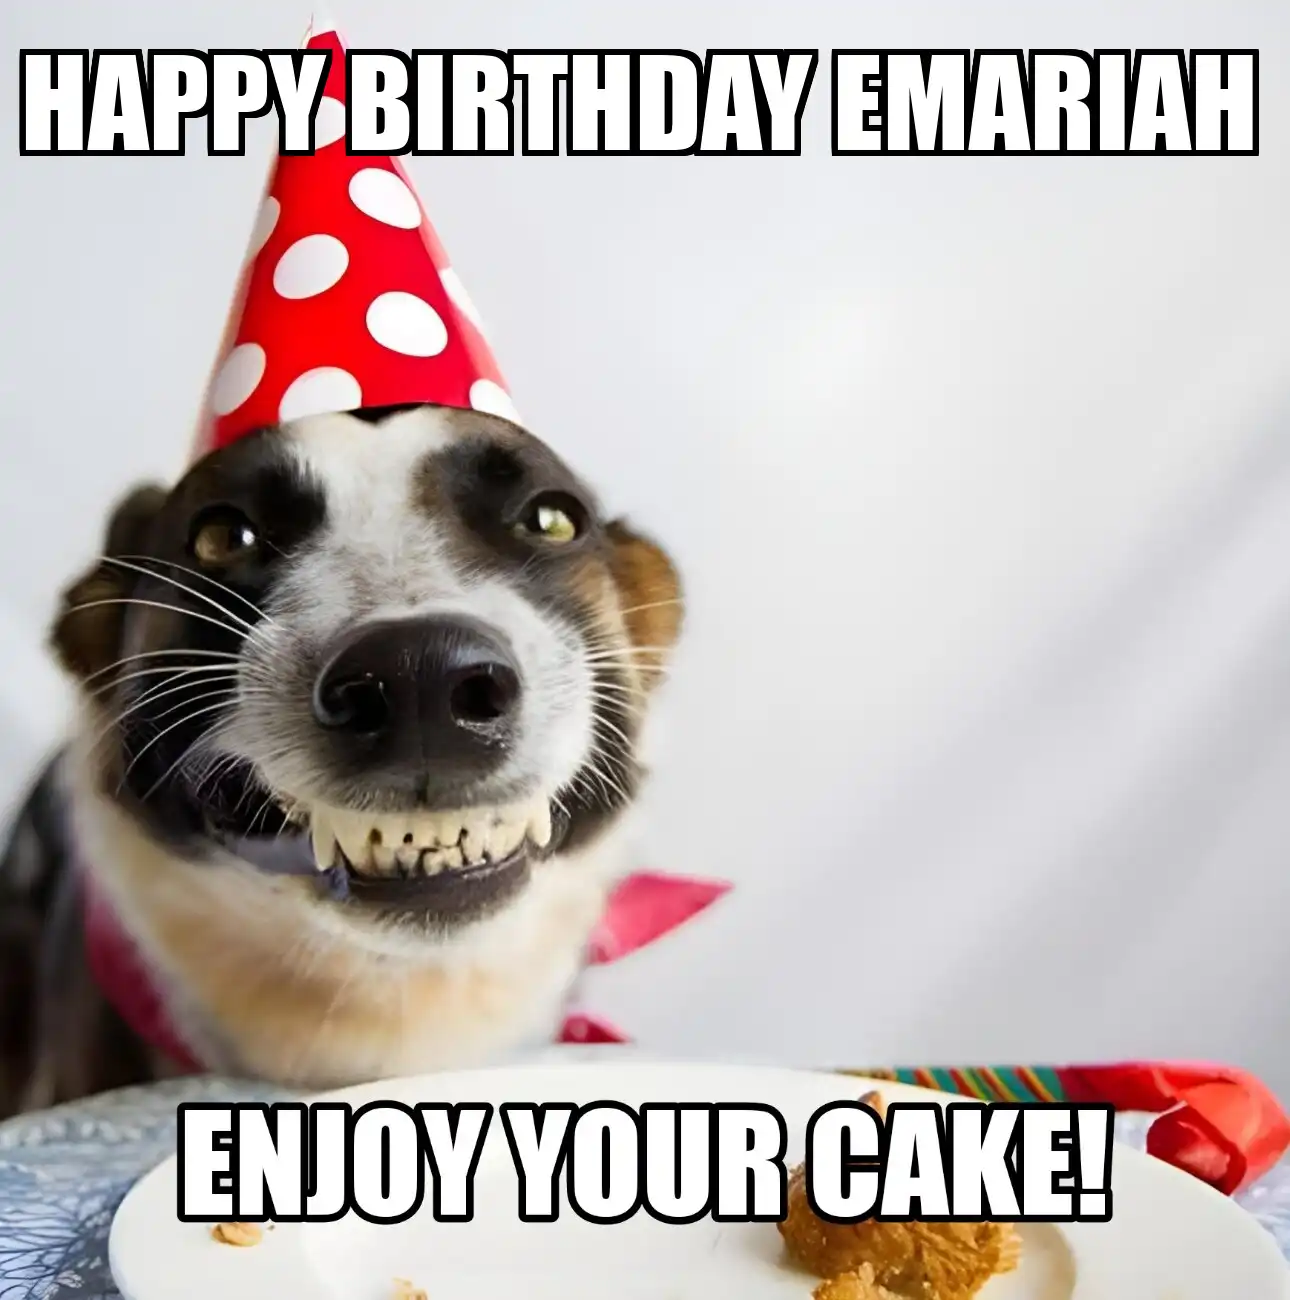 Happy Birthday Emariah Enjoy Your Cake Dog Meme